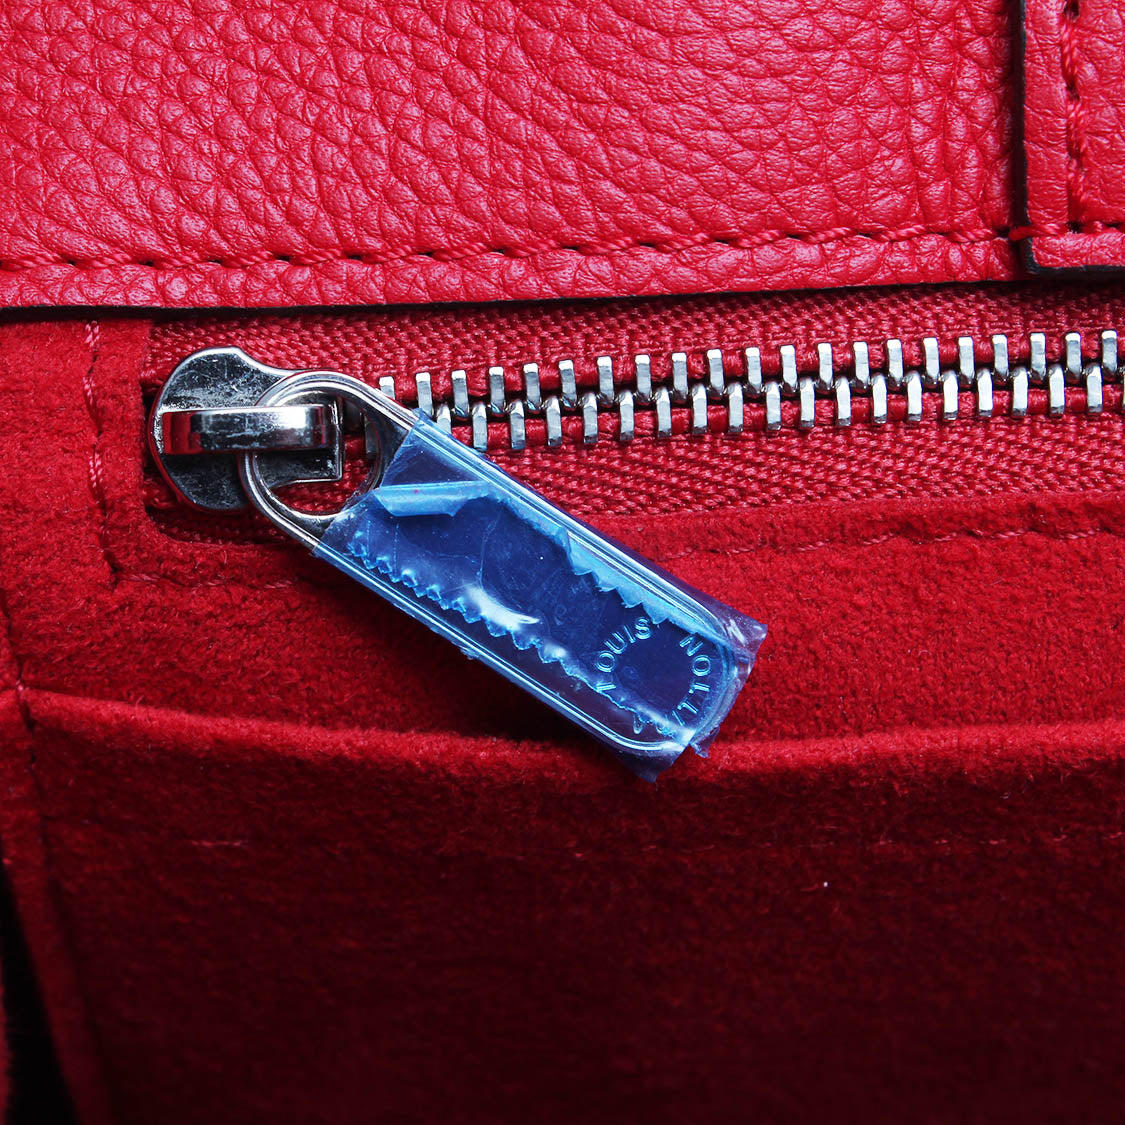 Leather Lockme Bucket Bag M54677 – LuxUness